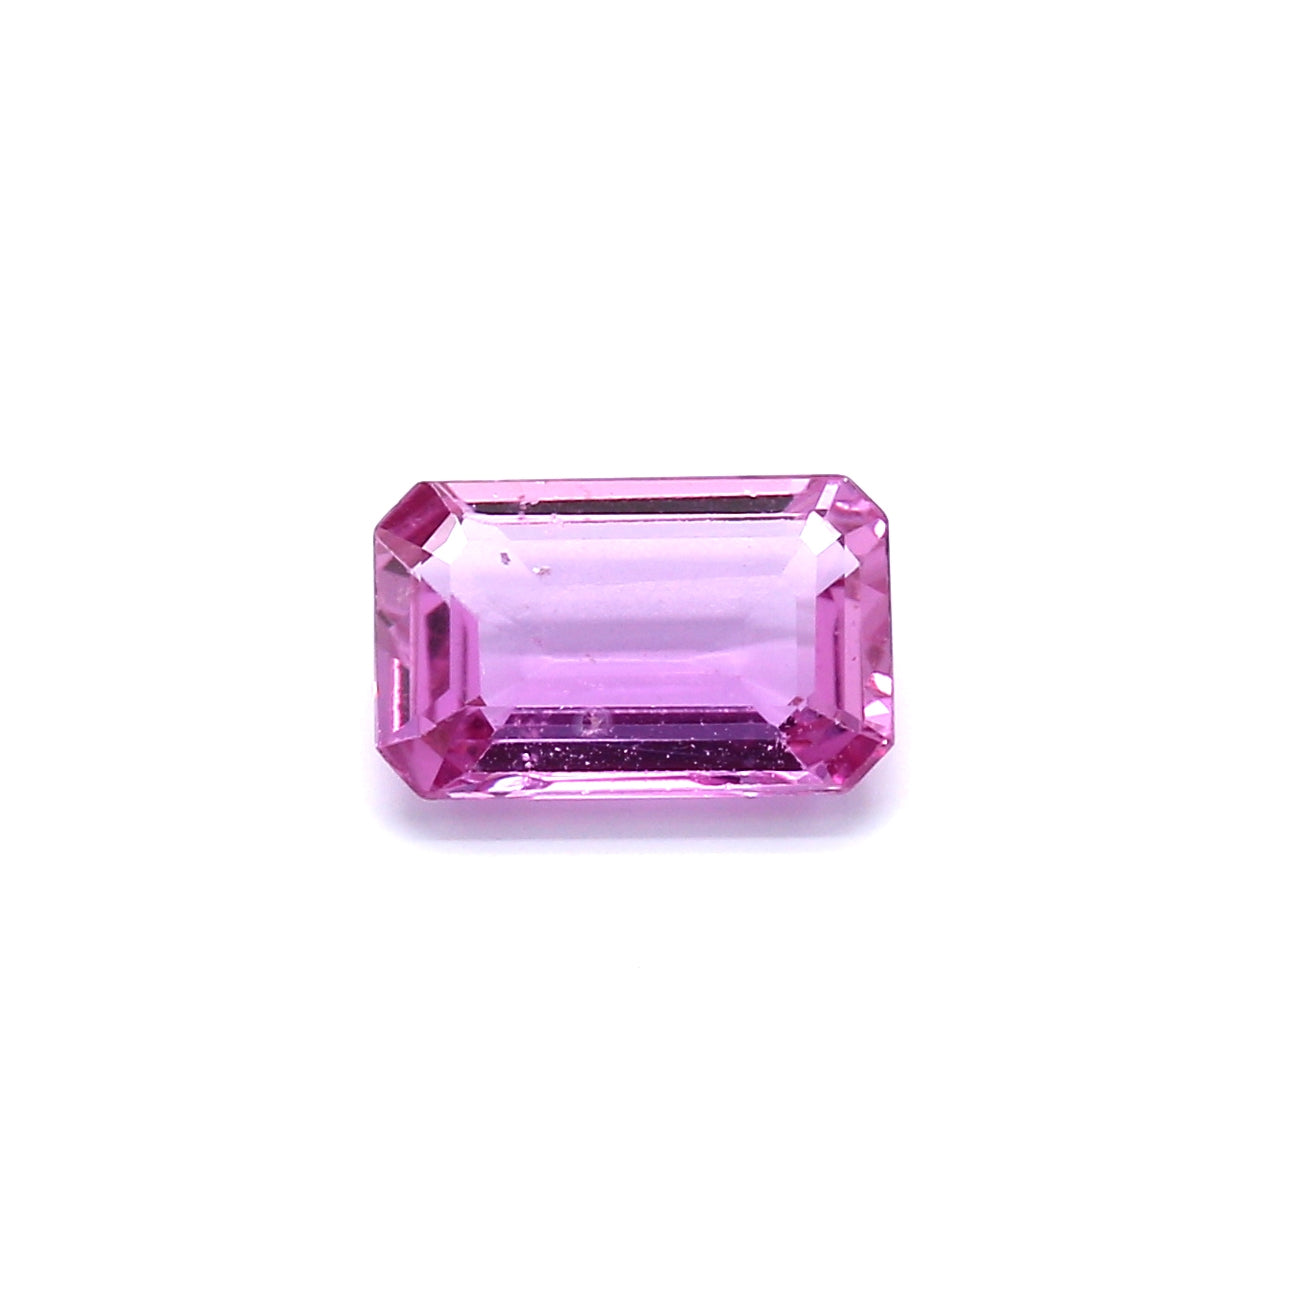 1.75ct Pink, Octagon Sapphire, Heated, Madagascar - 9.03 x 5.79 x 2.78mm